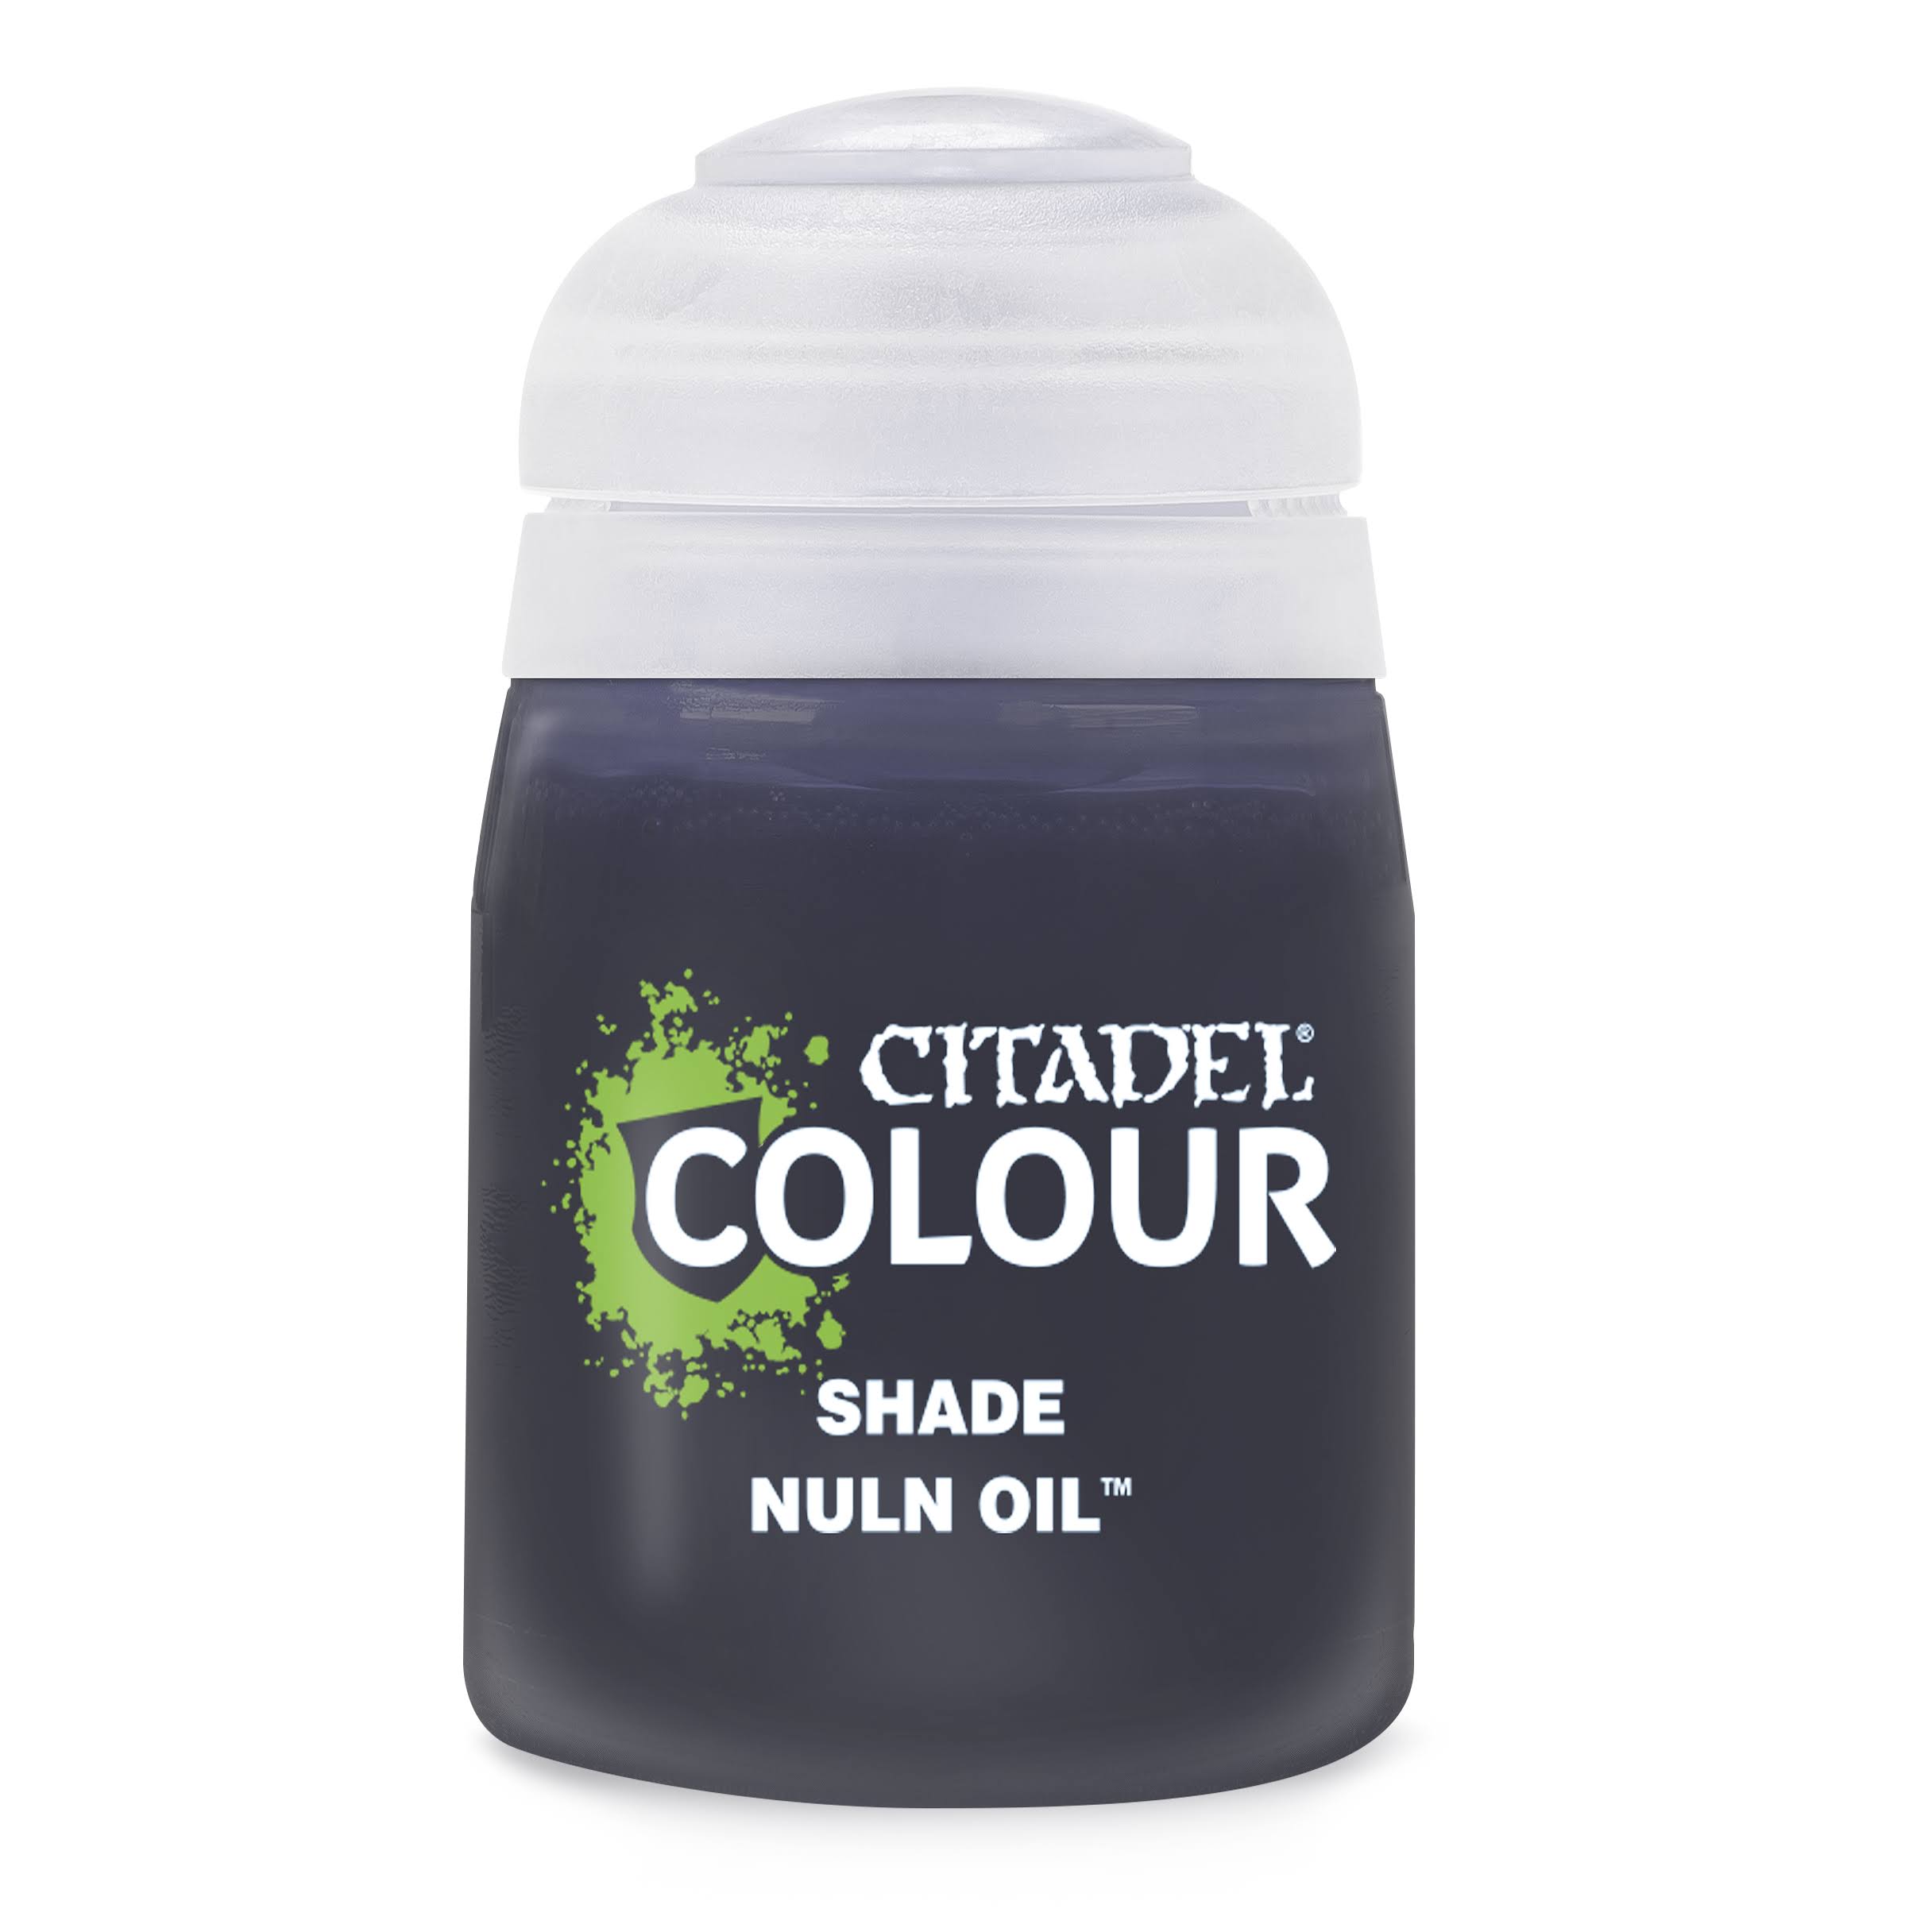 Citadel Shade Nuln Oil - 24ml